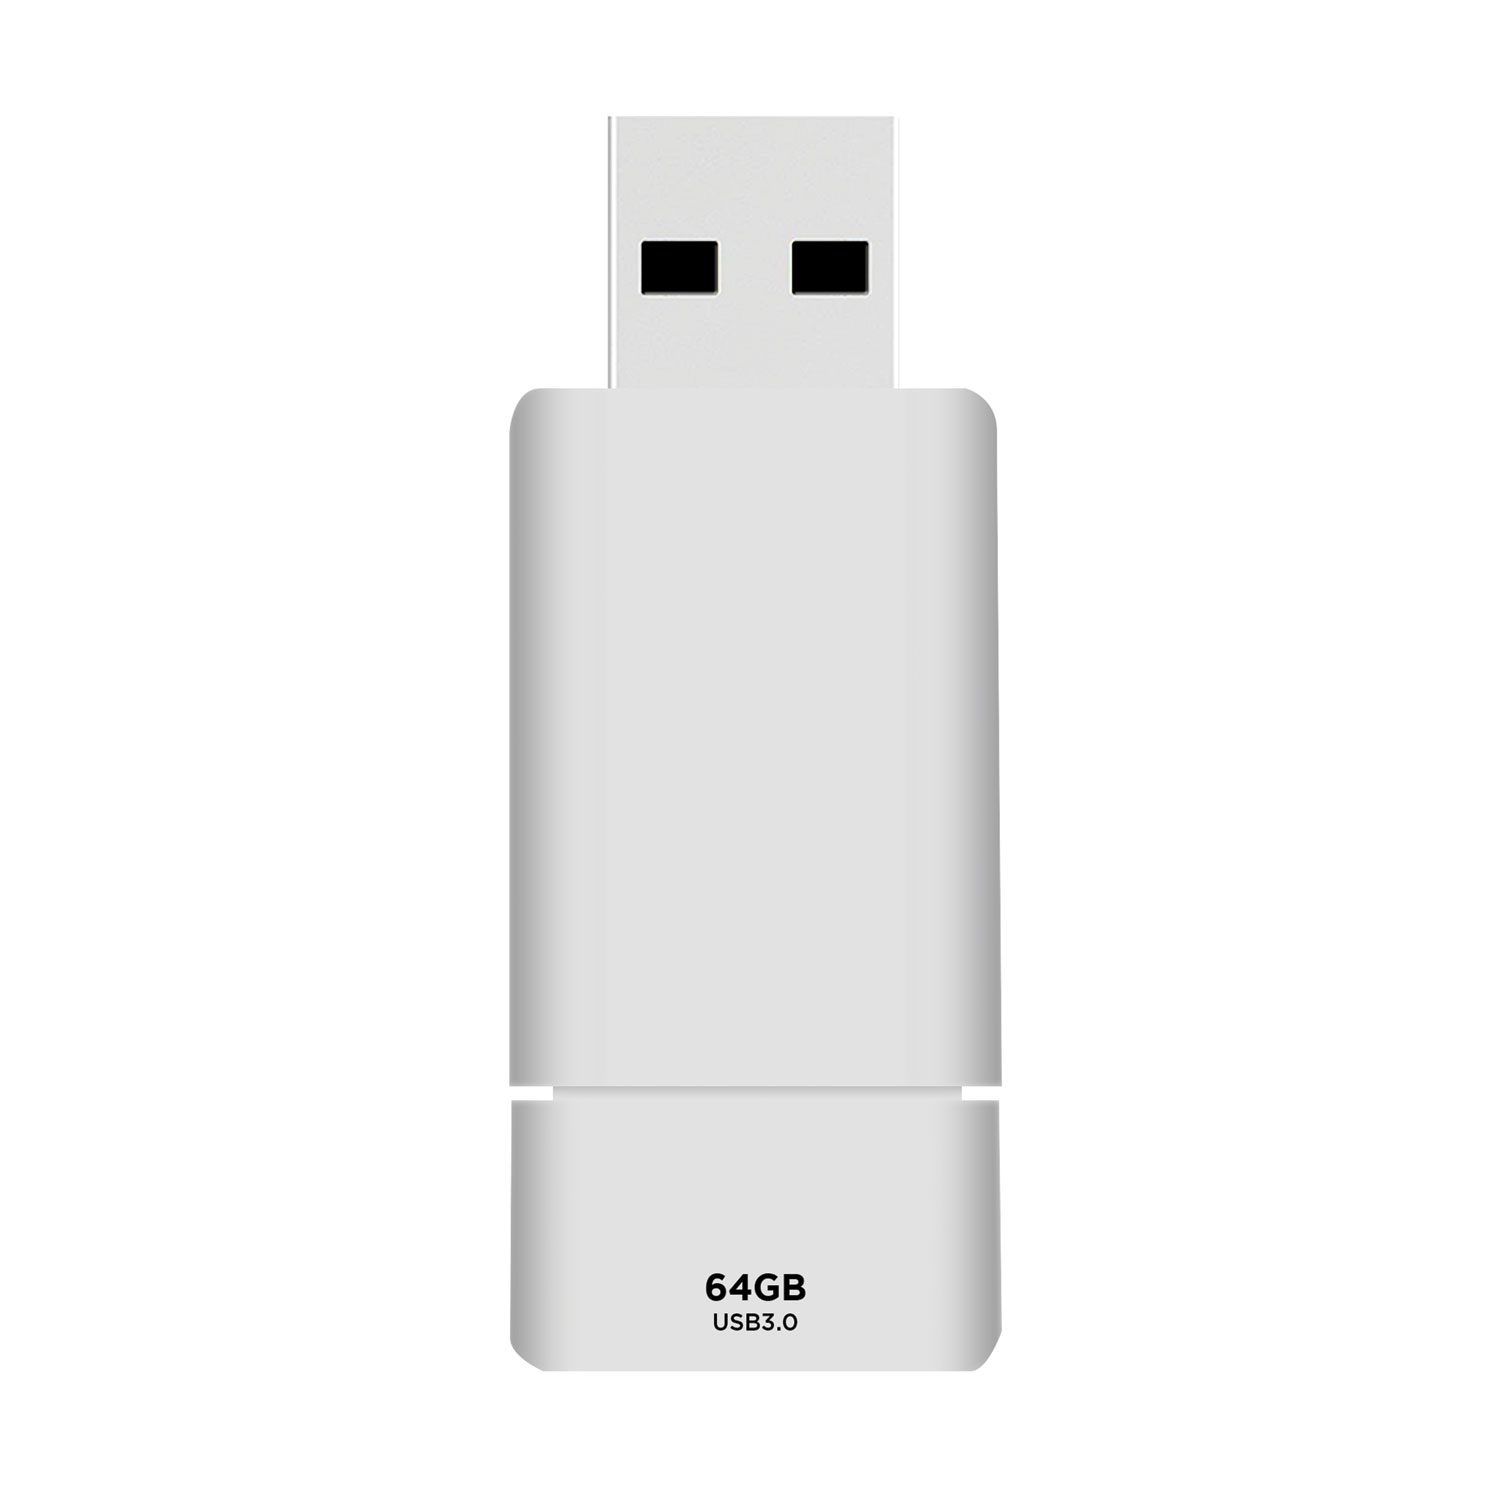  Gigastone TE-U364GB-R USB 3.0 Flash Drive, 64 GB, Assorted Color (GGS24387005) 